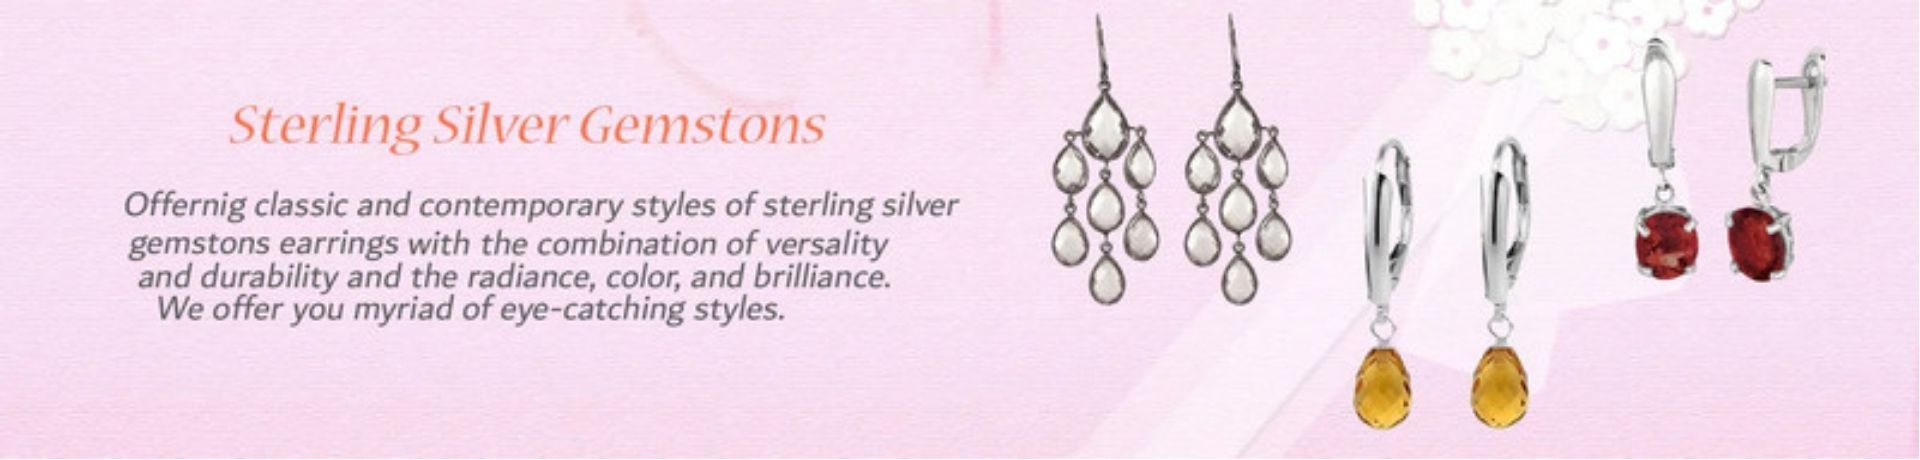 Sterling Silver Gemstones